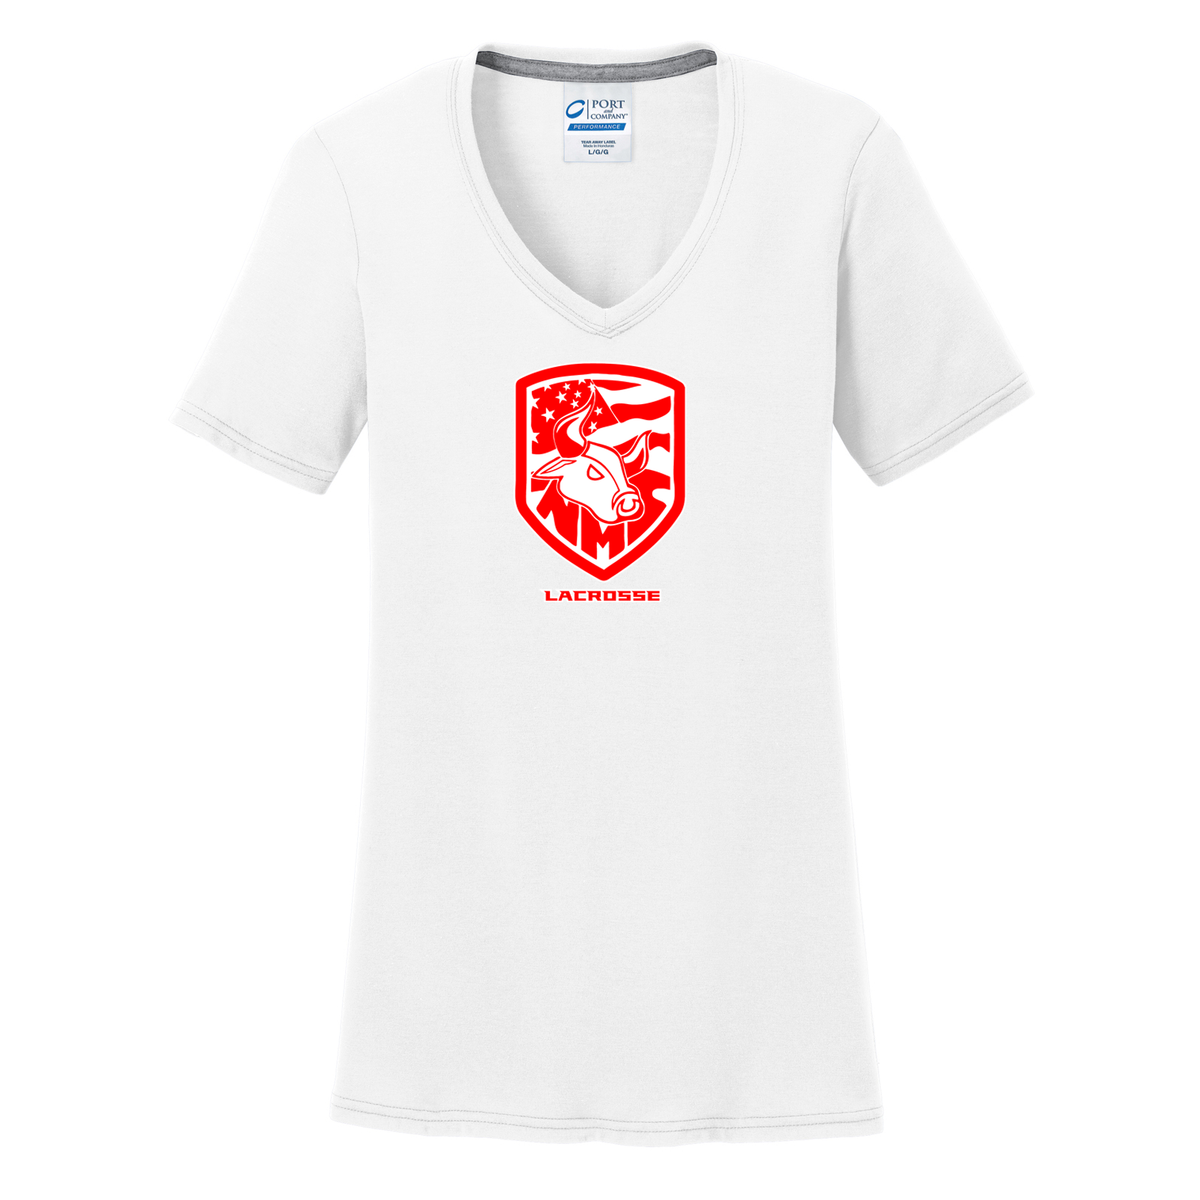 Nesaquake Lacrosse Women's T-Shirt